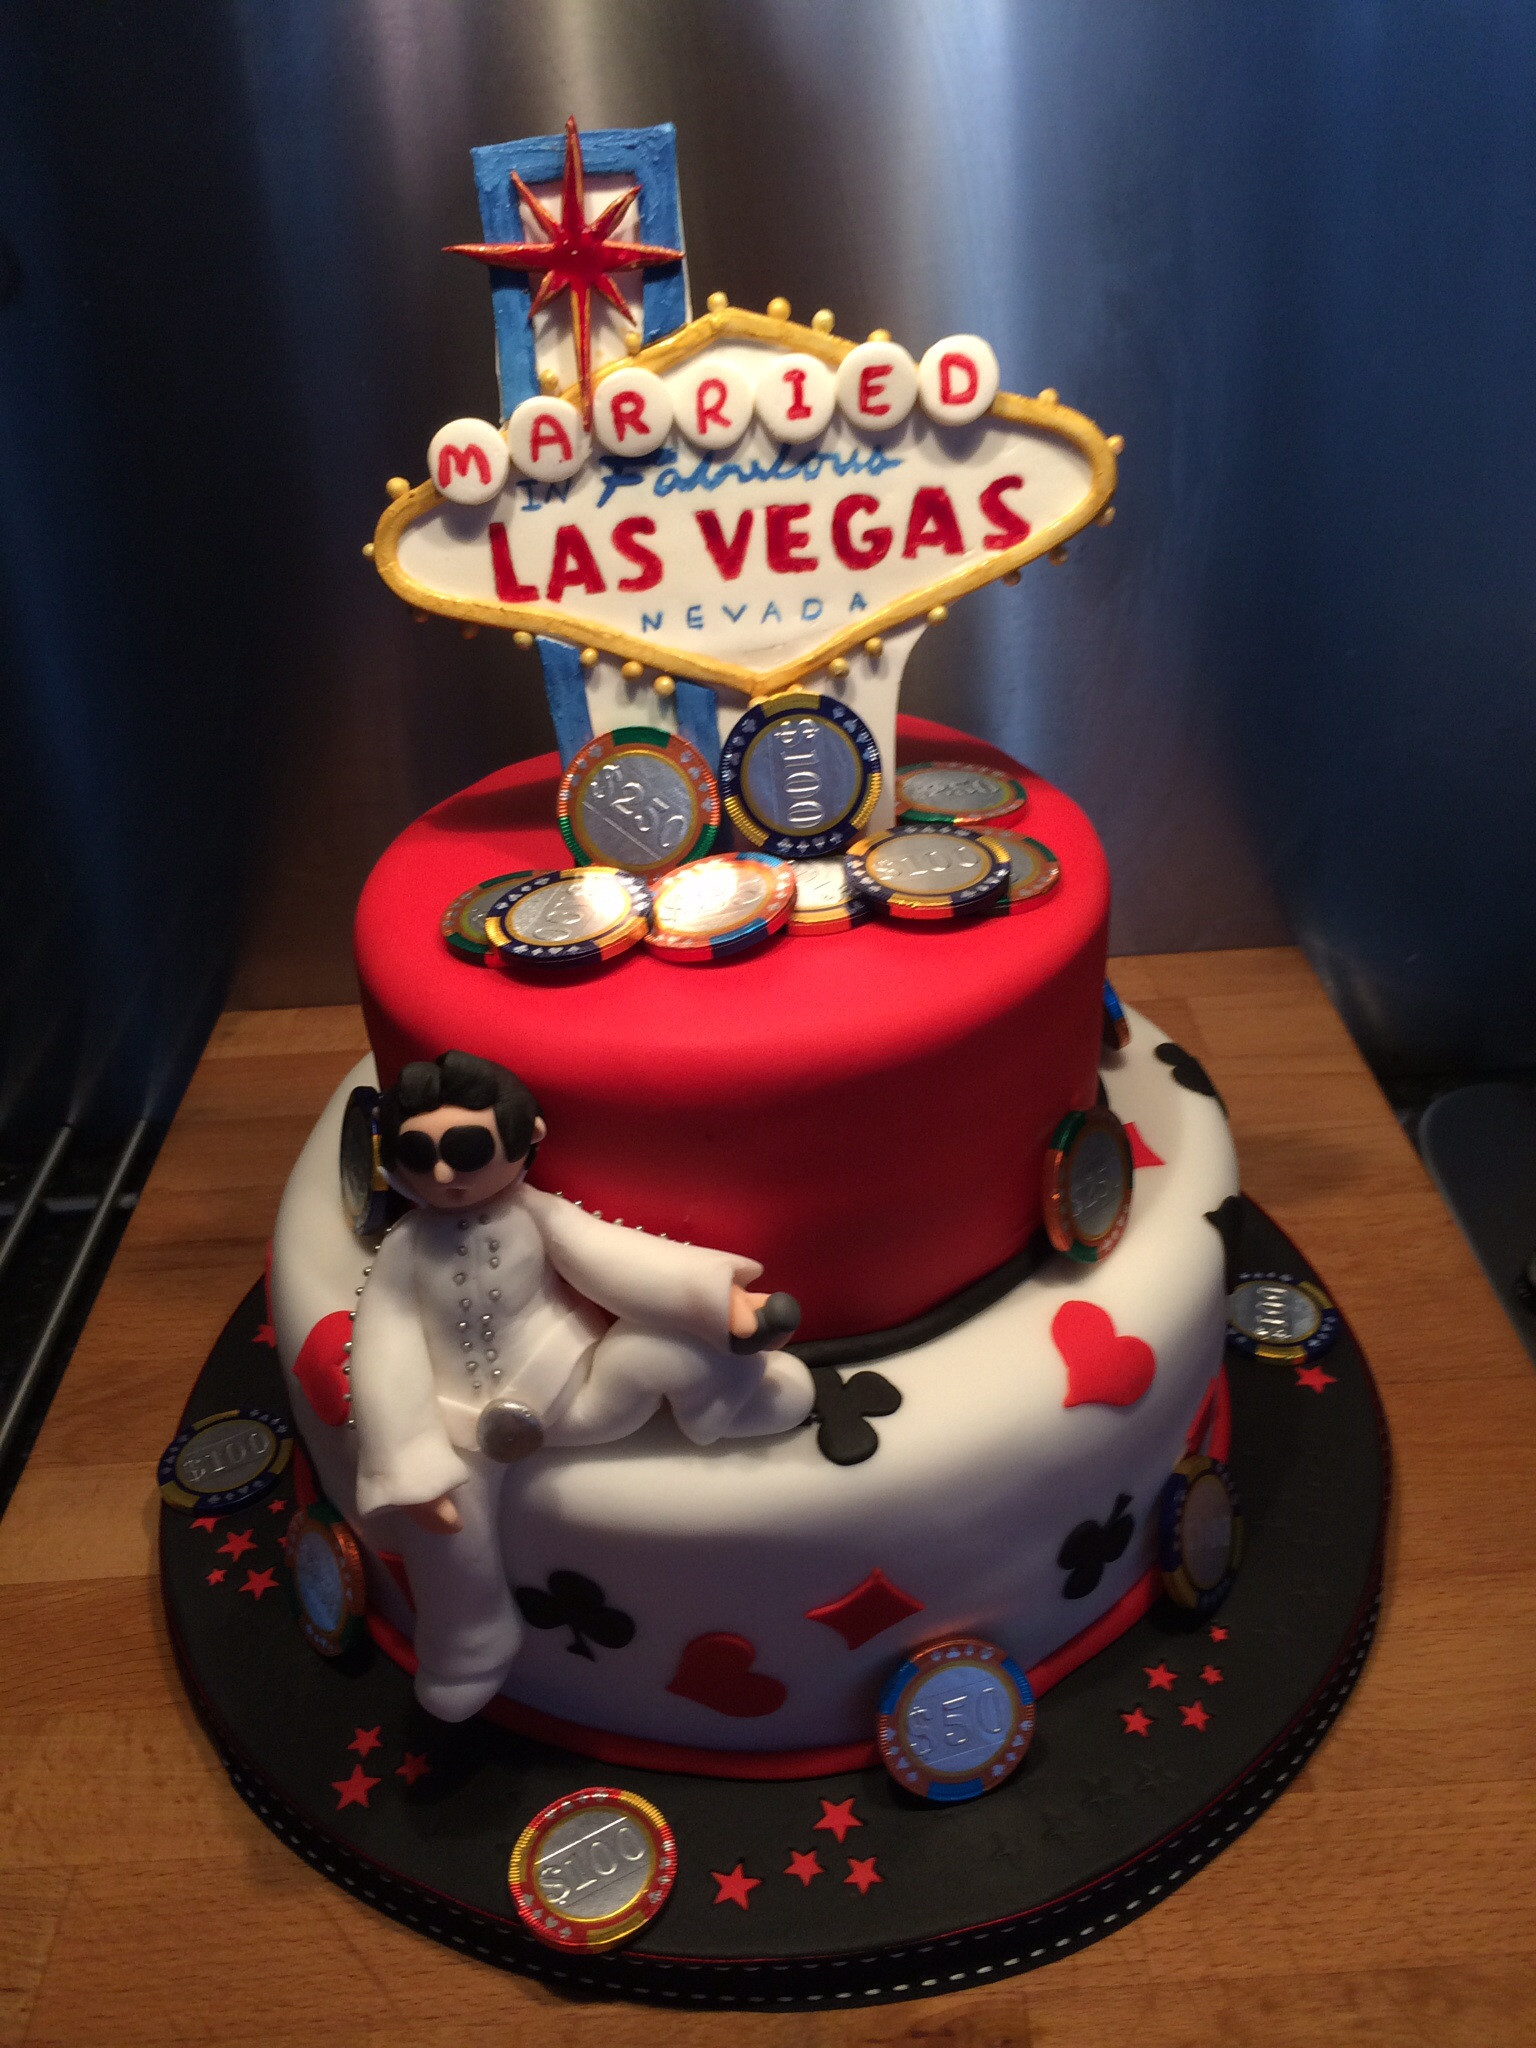 Las Vegas Wedding Cakes
 Las Vegas wedding cake and special guest – Little Black Hen